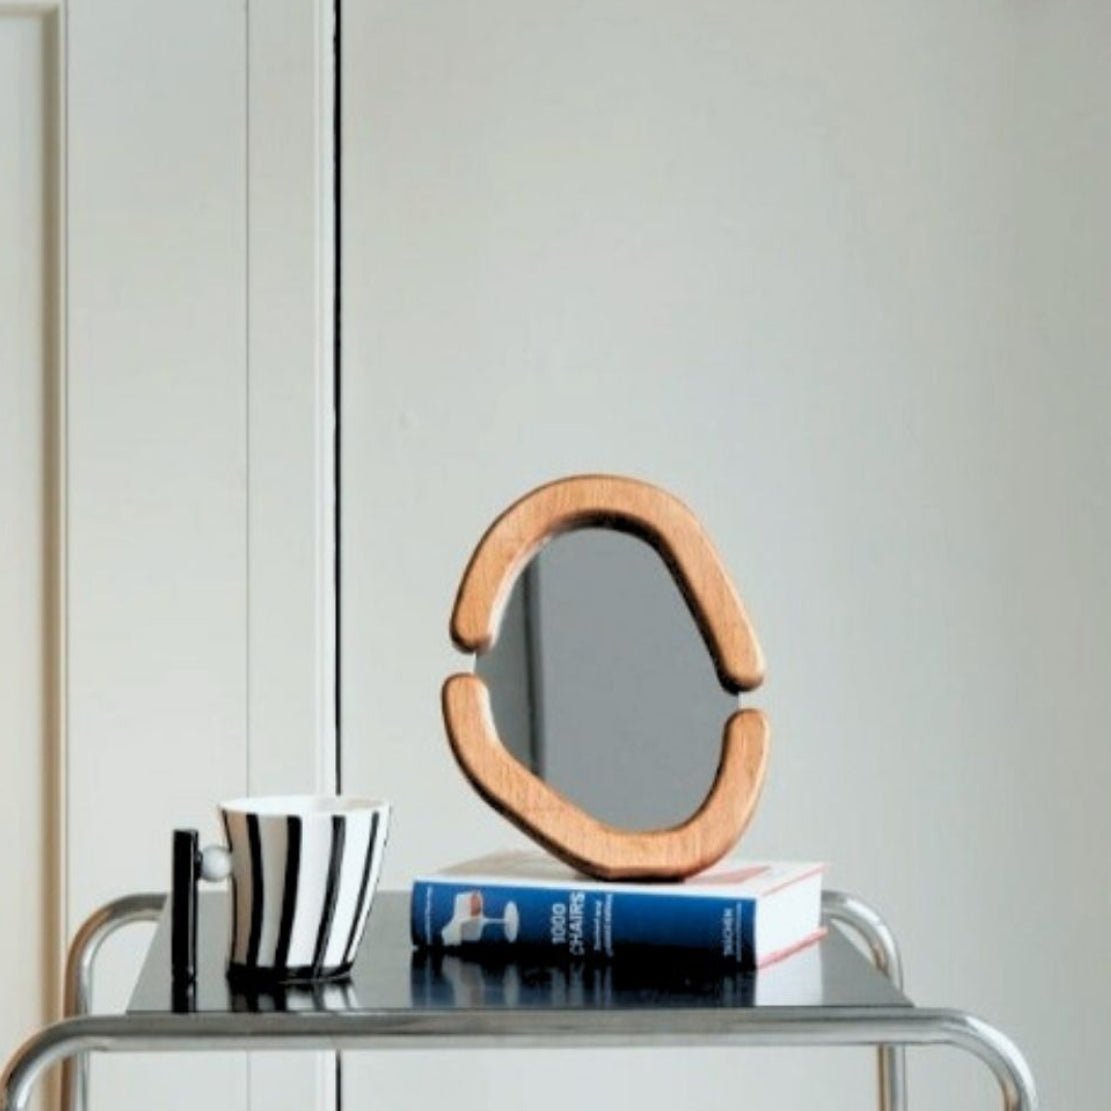 Asymmetrical wood frame decorative table mirror